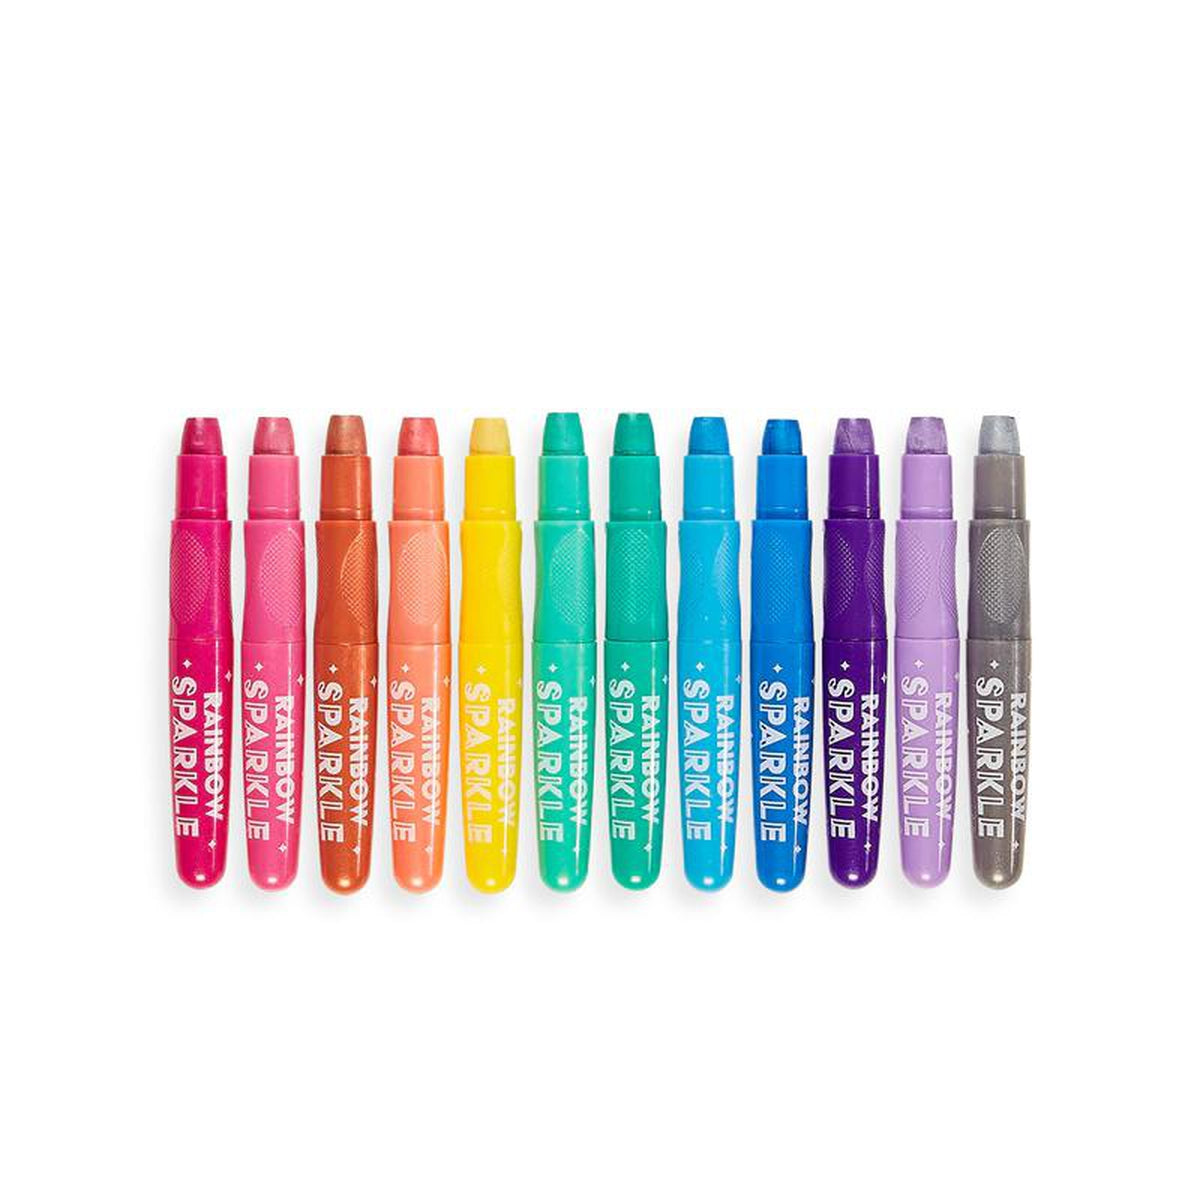 Rainbow Sparkle Watercolour Gel Crayons